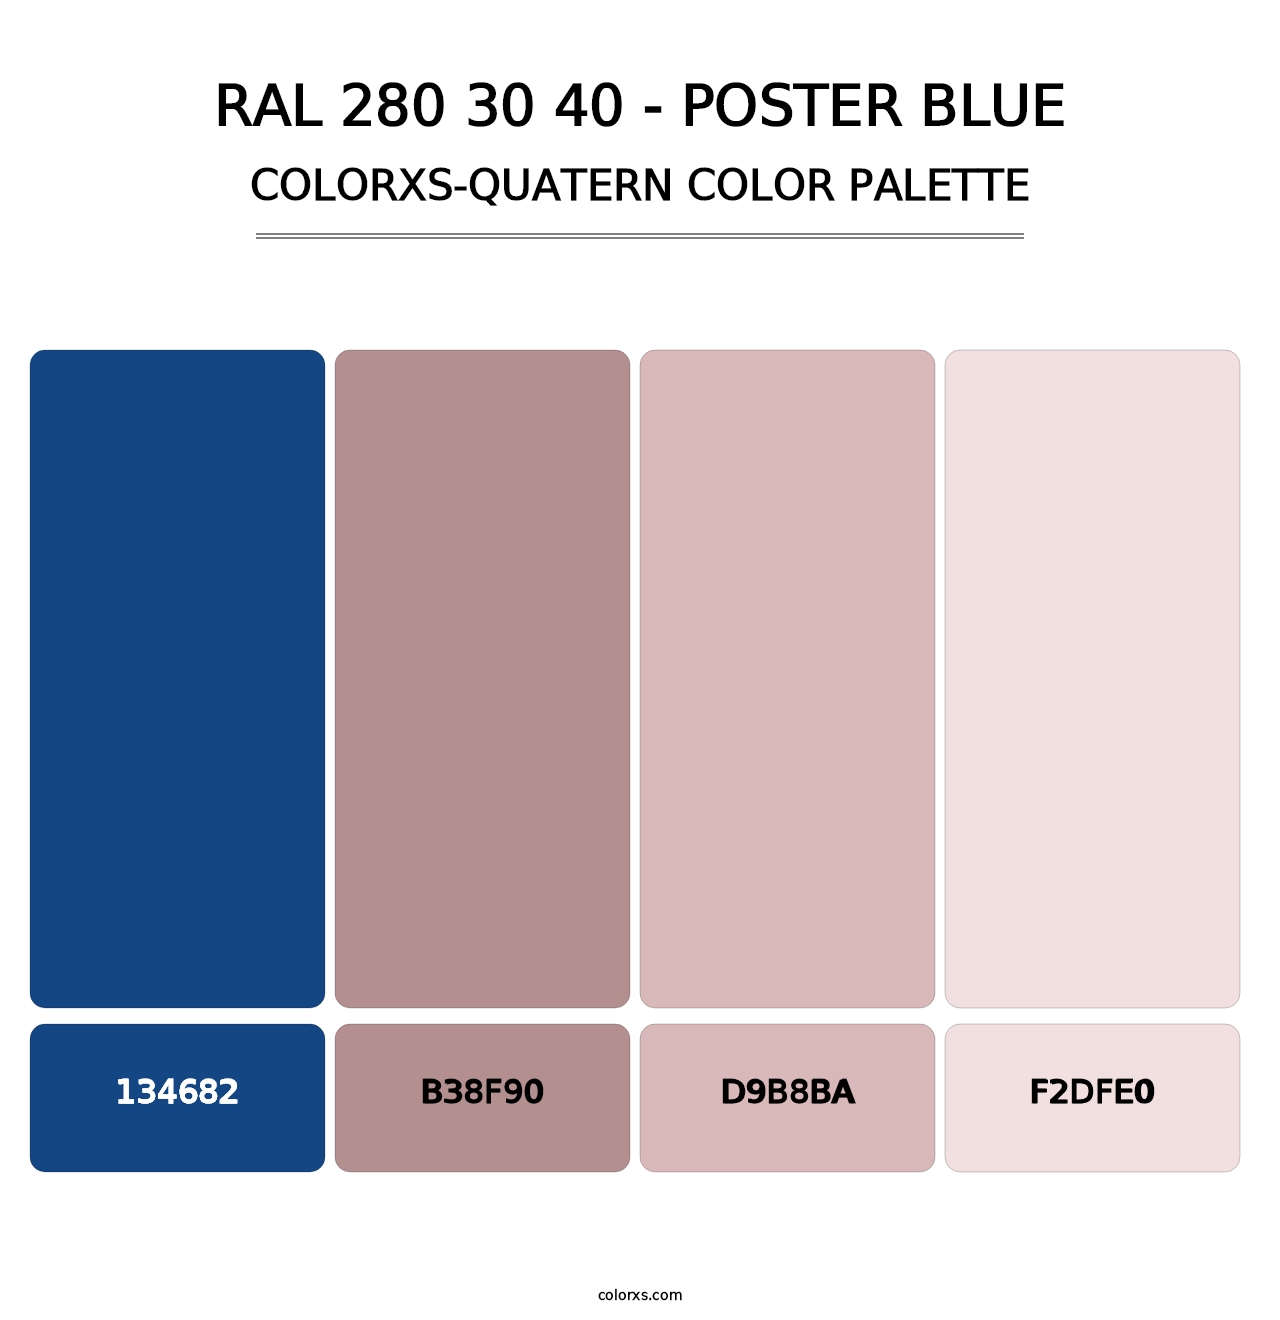 RAL 280 30 40 - Poster Blue - Colorxs Quatern Palette